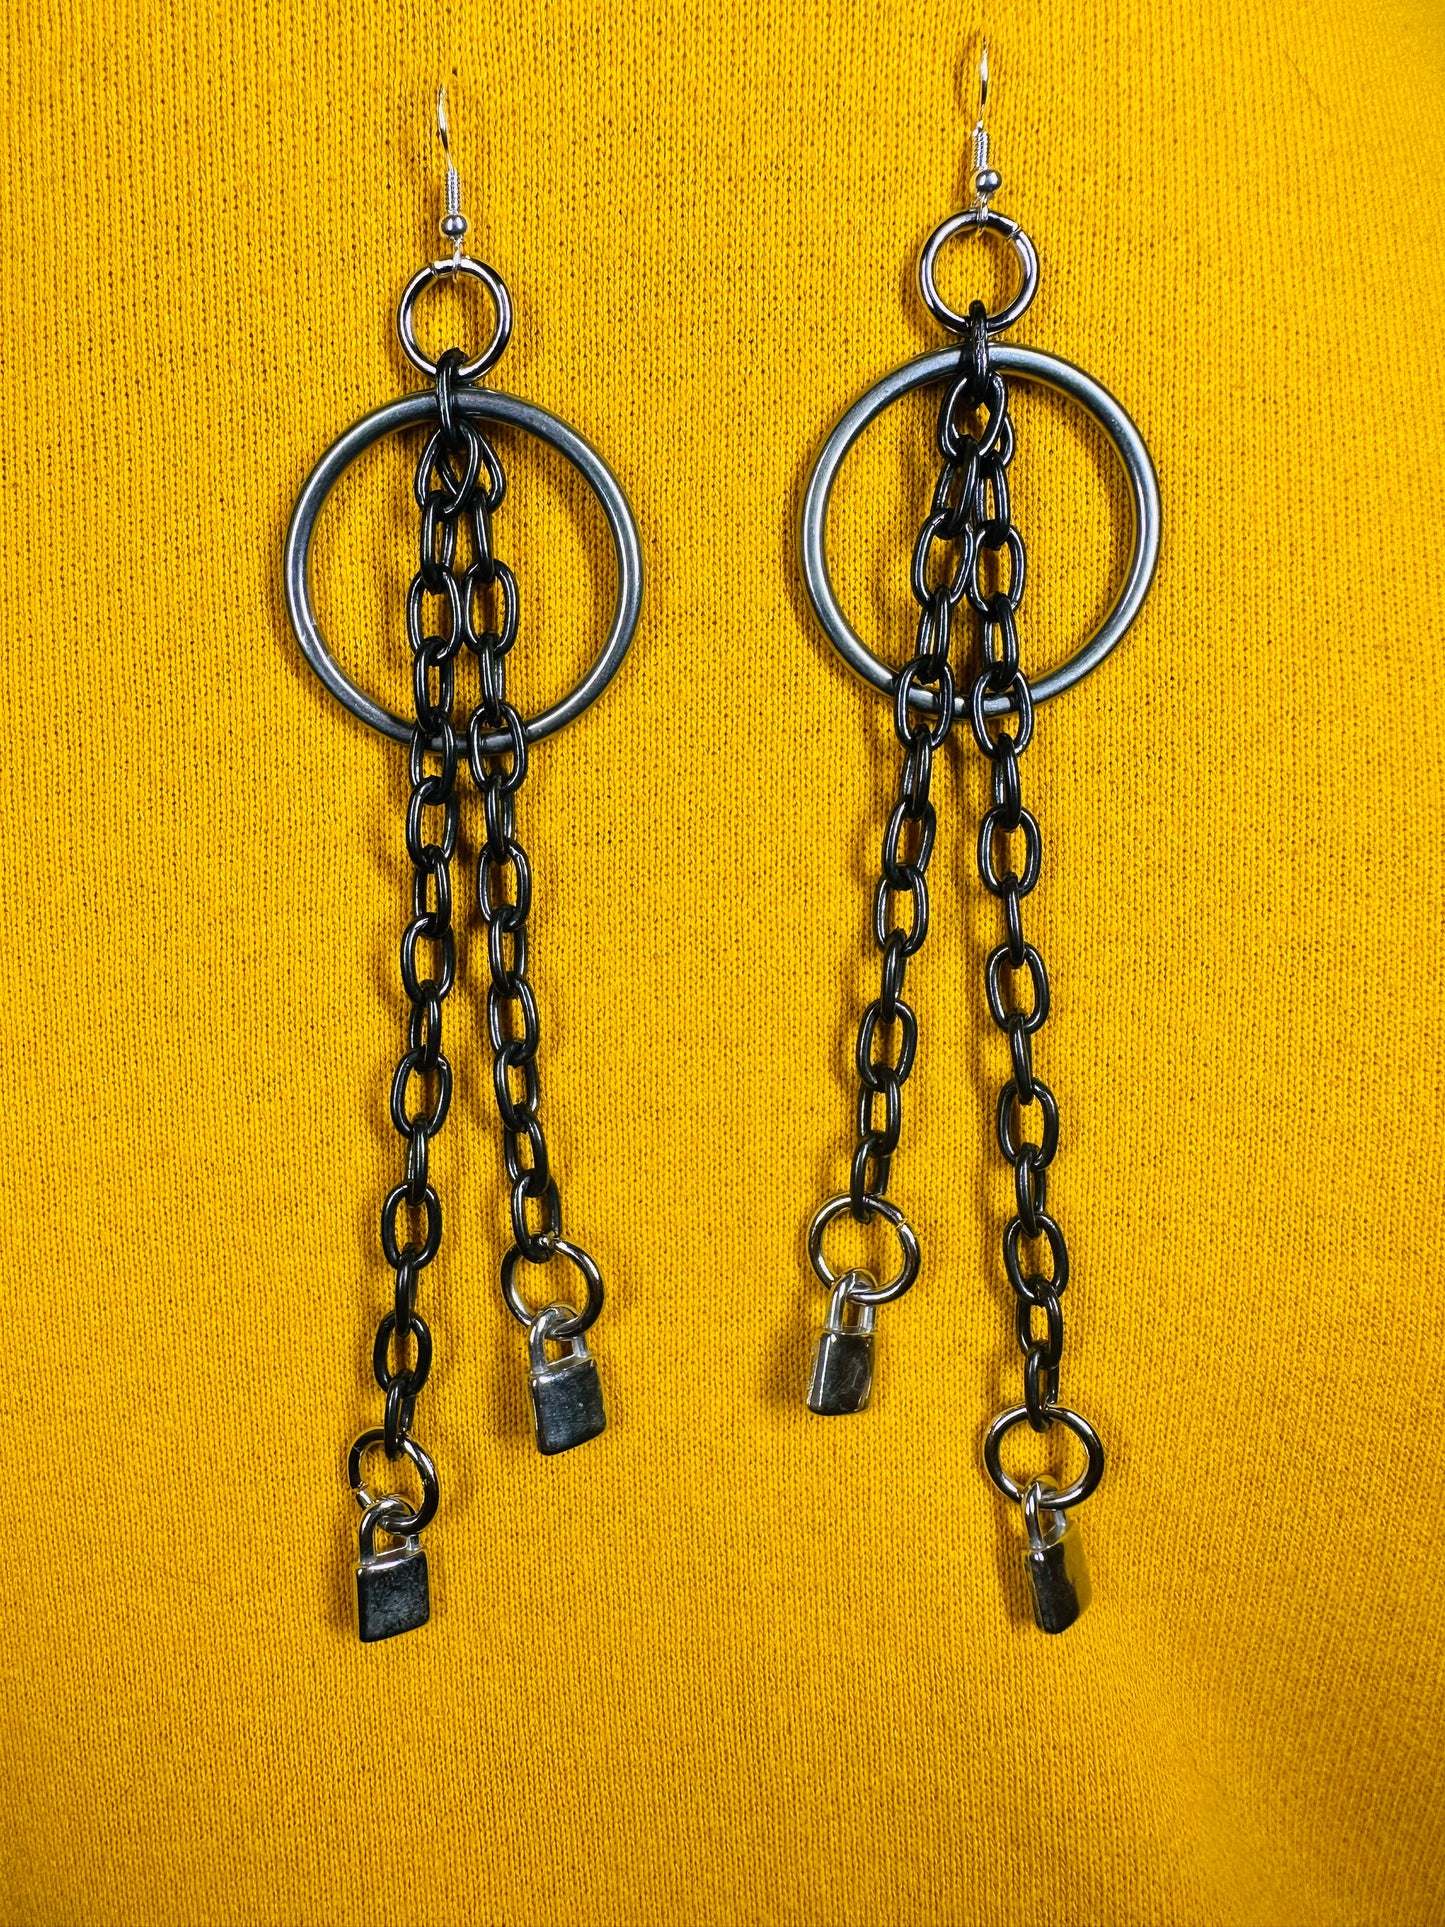 O ring long chain and lock Danglers